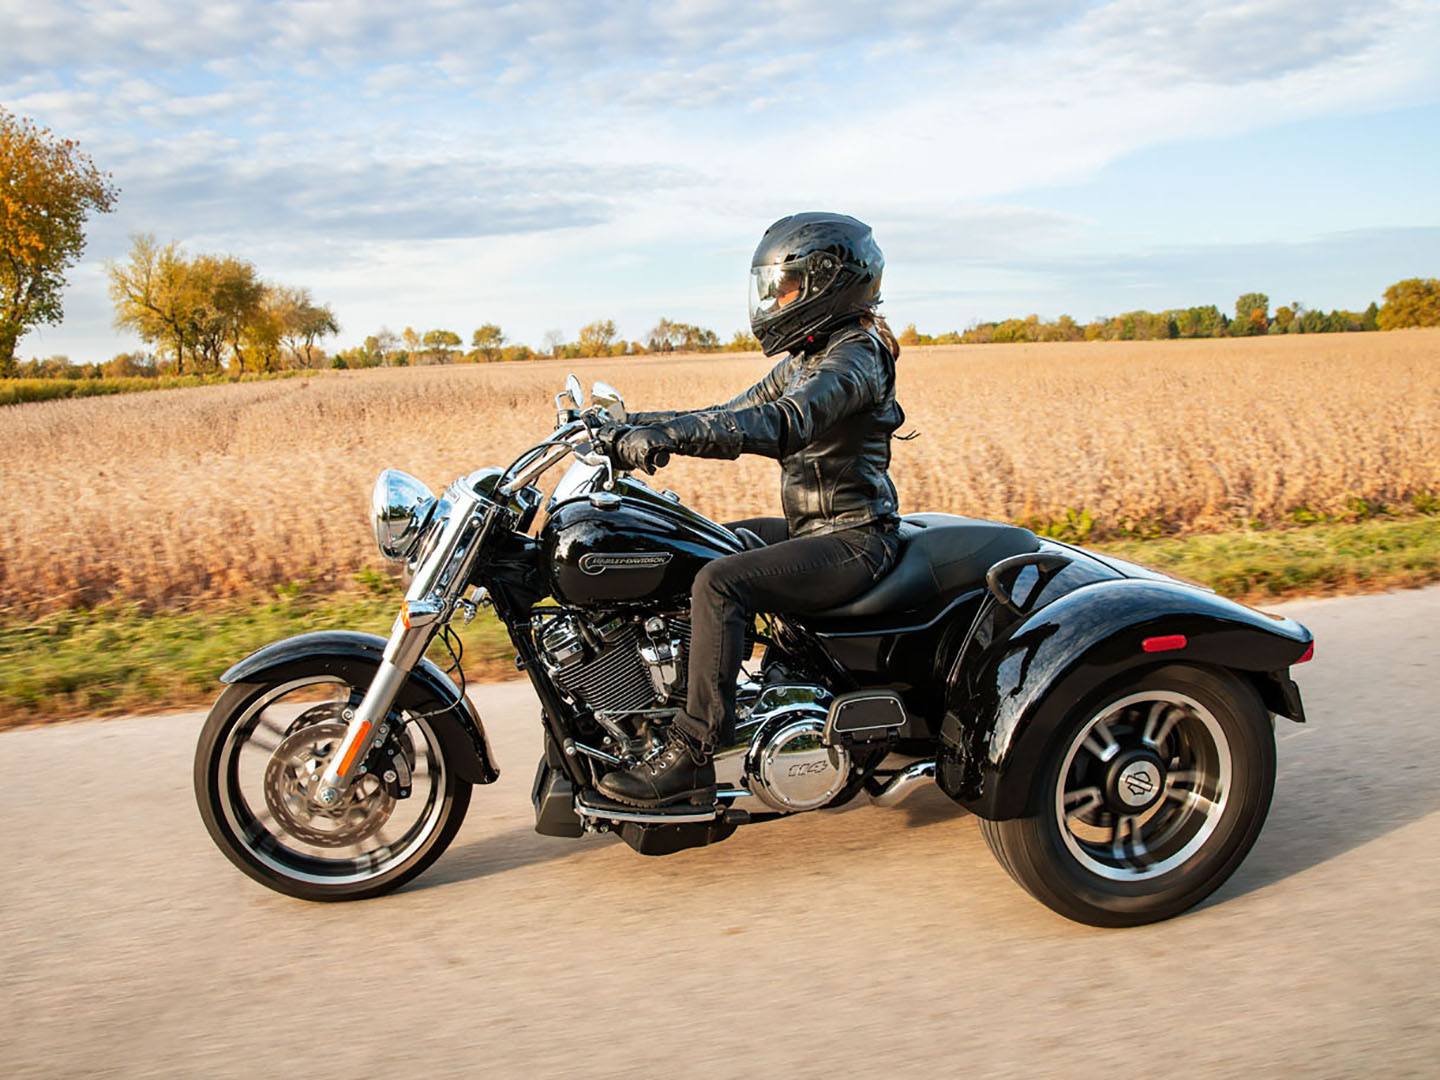 2021 Harley-Davidson Freewheeler® in Rochester, New York - Photo 8